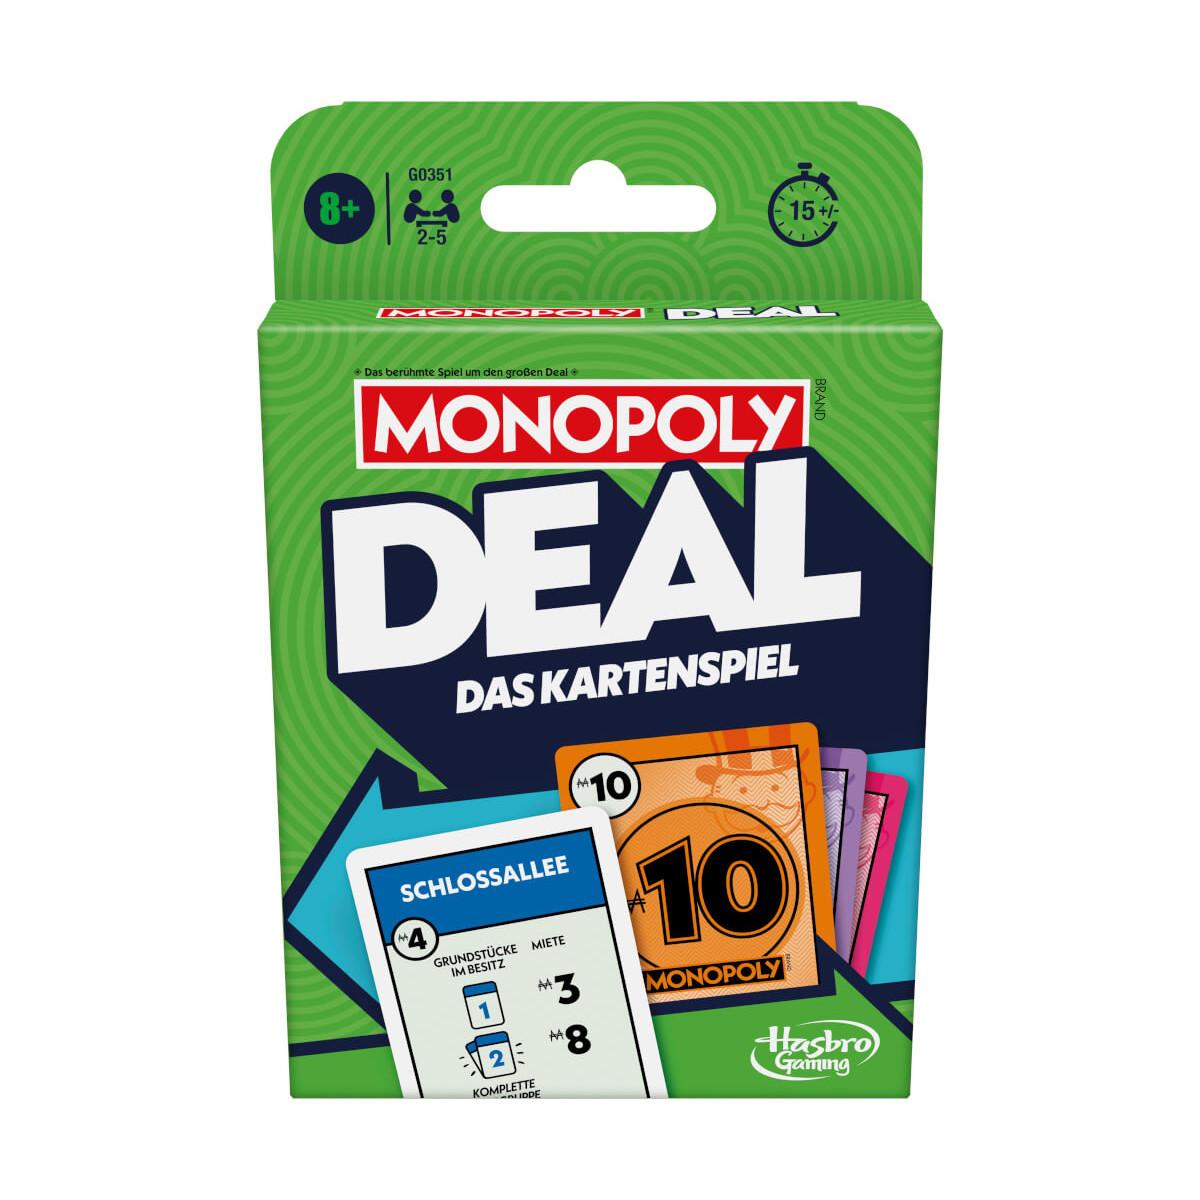 Monopoly Deal - Das Kartenspiel